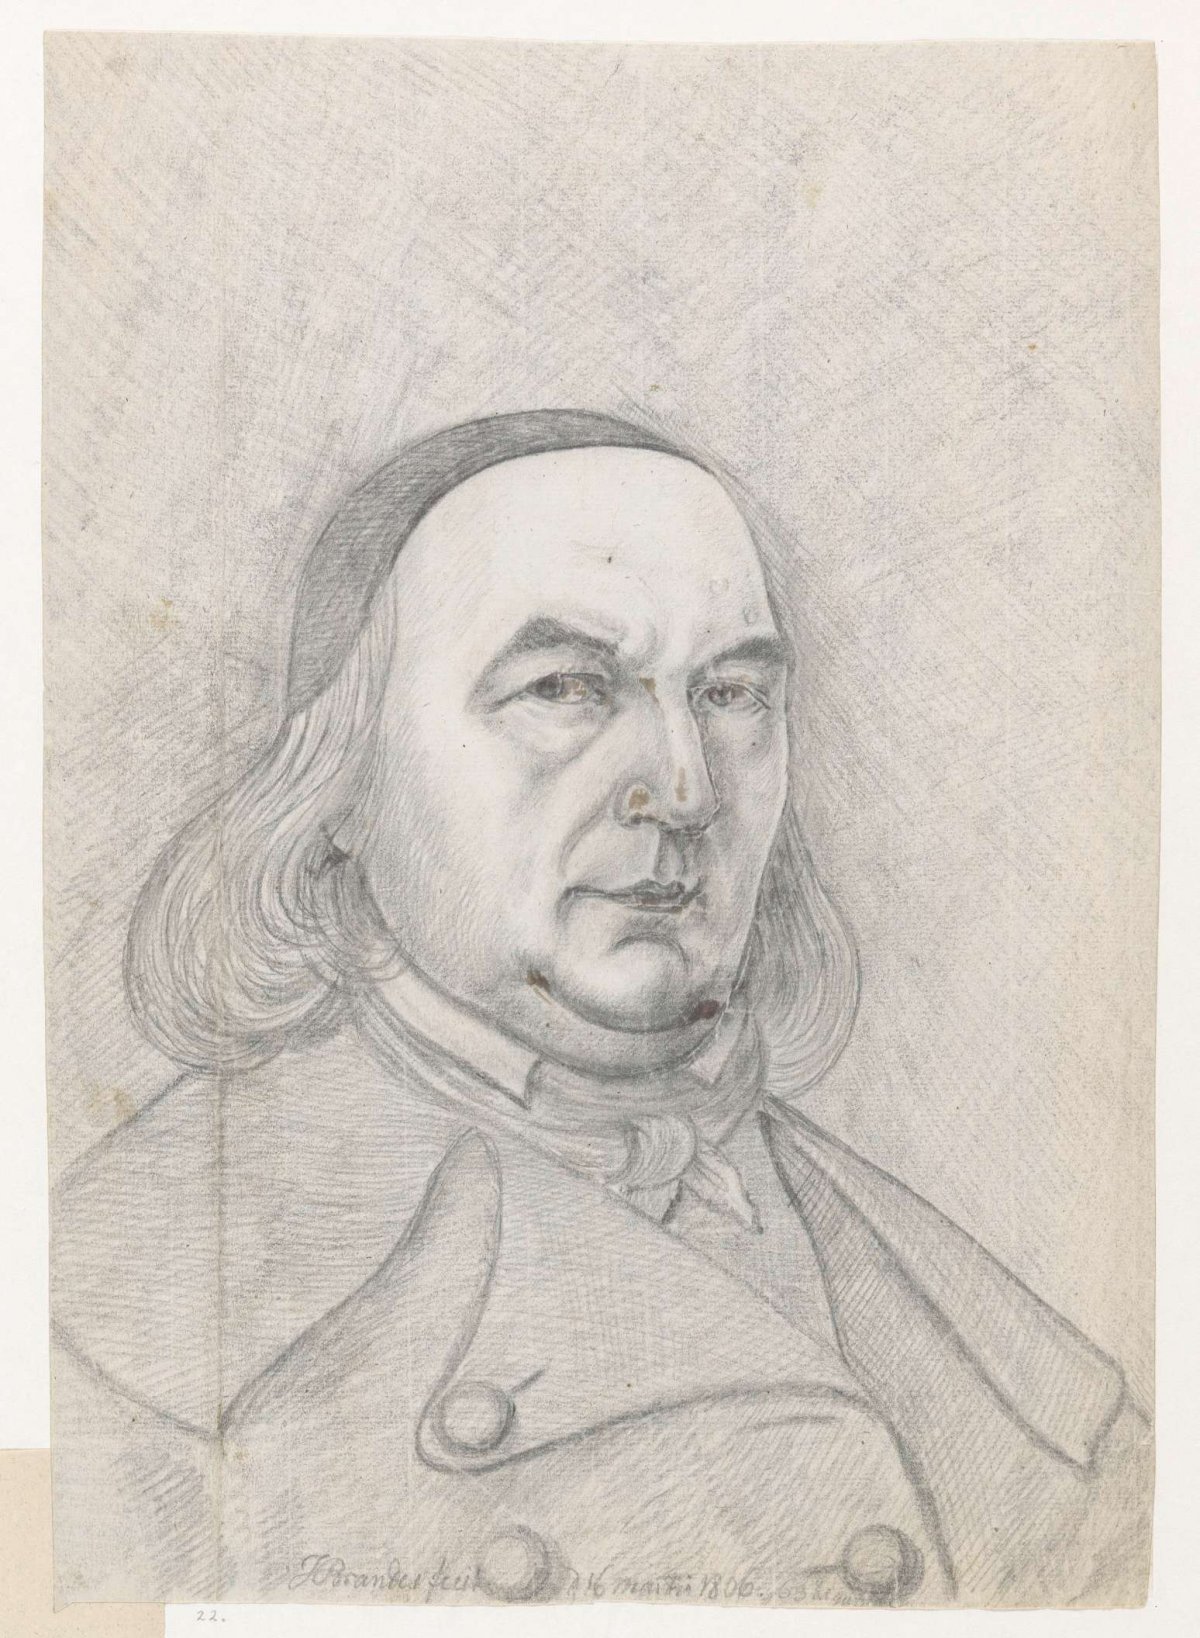 Self-portrait of Jan Brandes, Jan Brandes, 1806